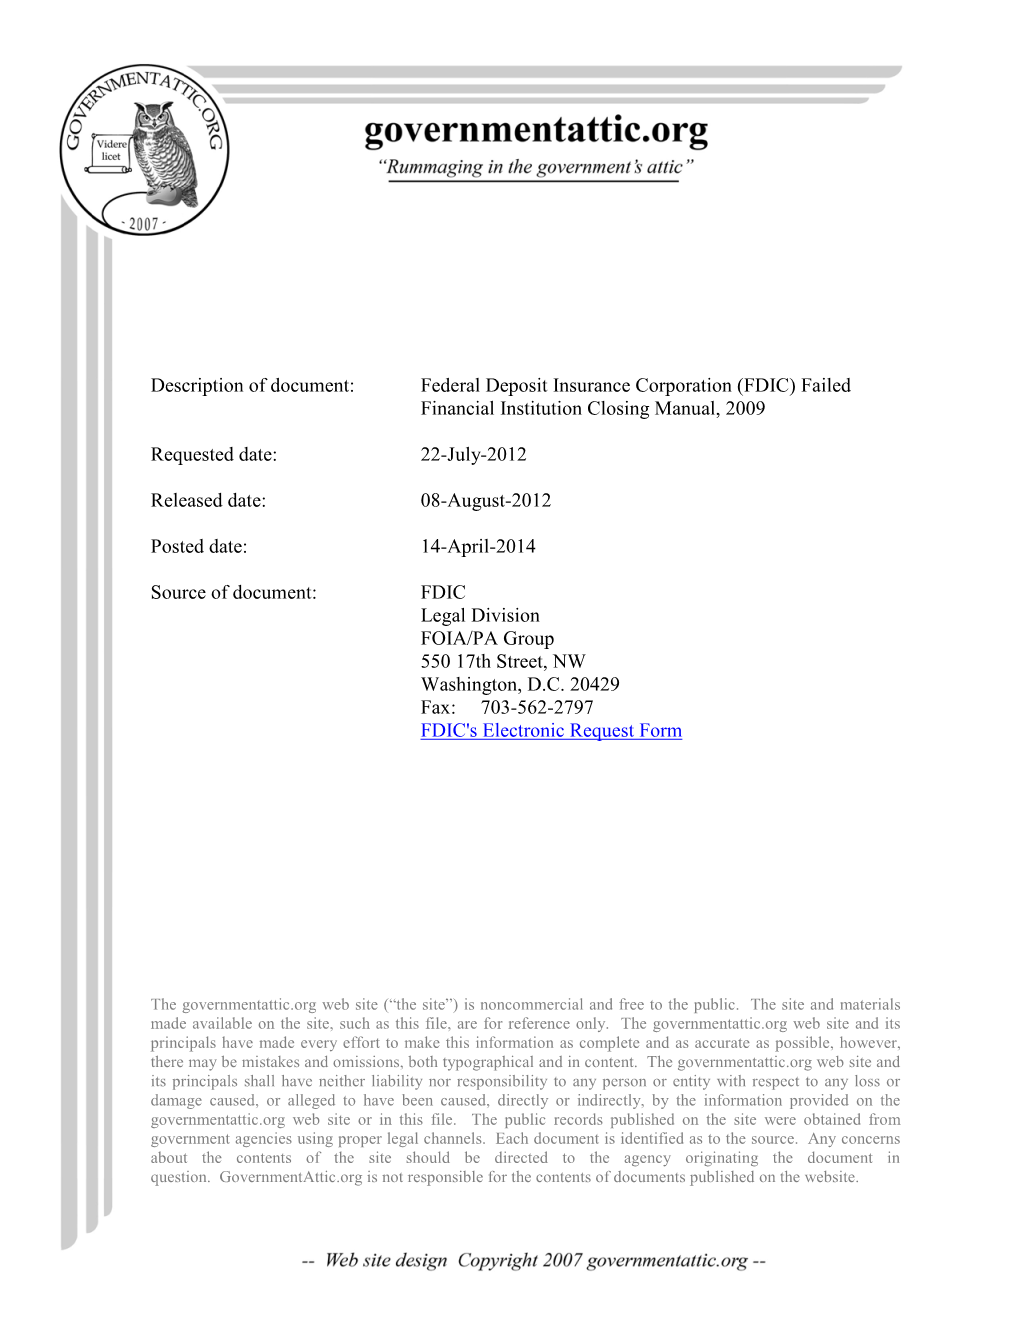 Federal Deposit Insurance Corporation (FDIC) Failed Financial Institution Closing Manual, 2009